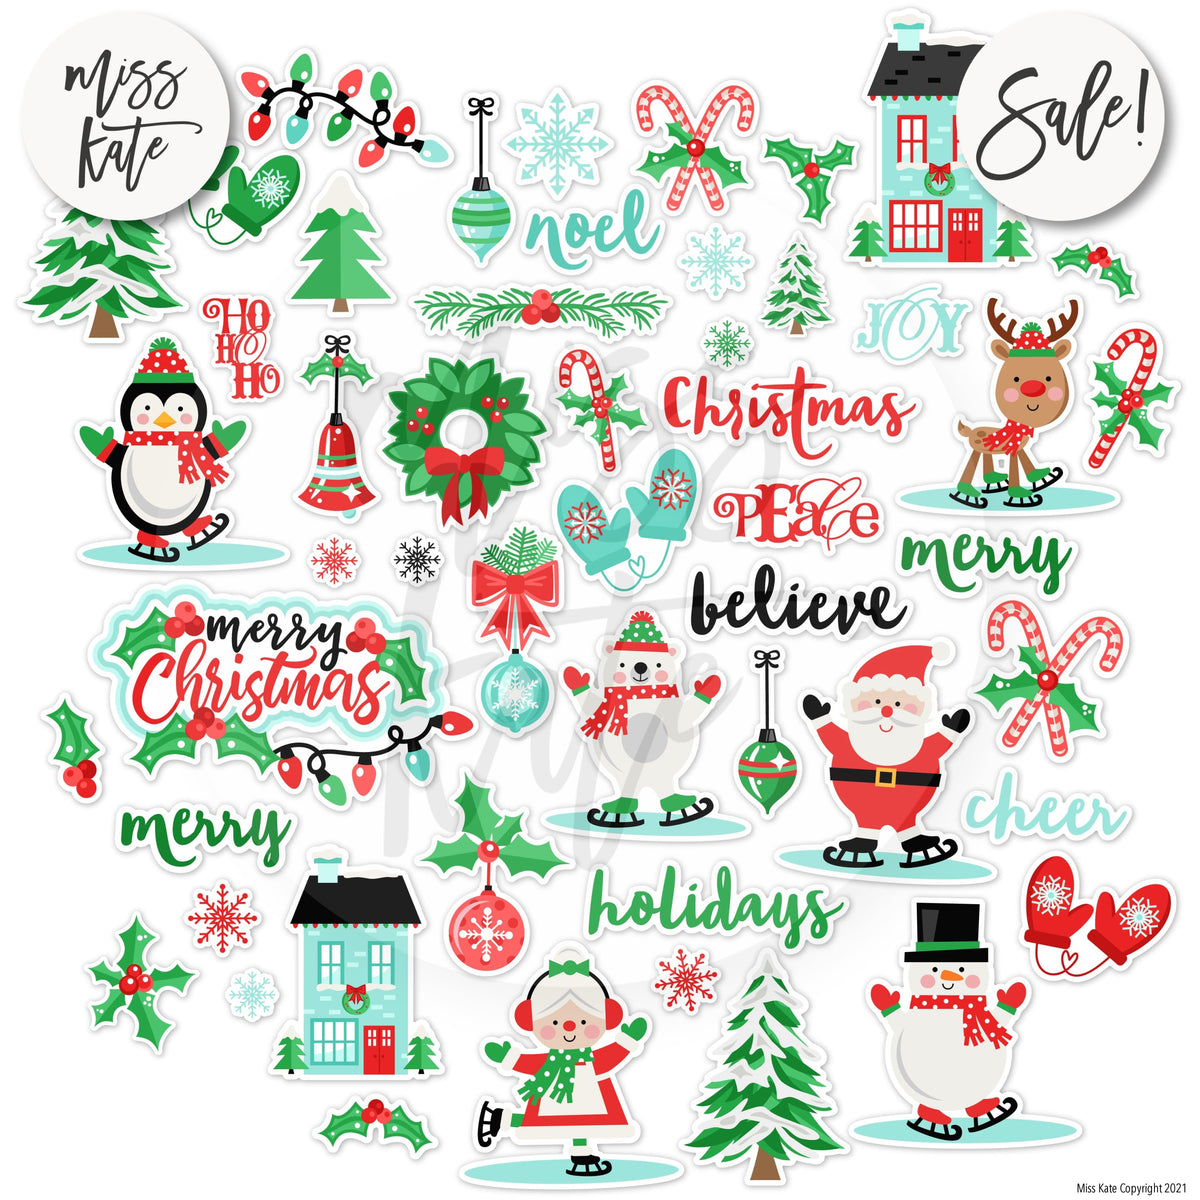 Festive Christmas - Scrapbook Paper & Sticker Kit 12x12 – MISS KATE